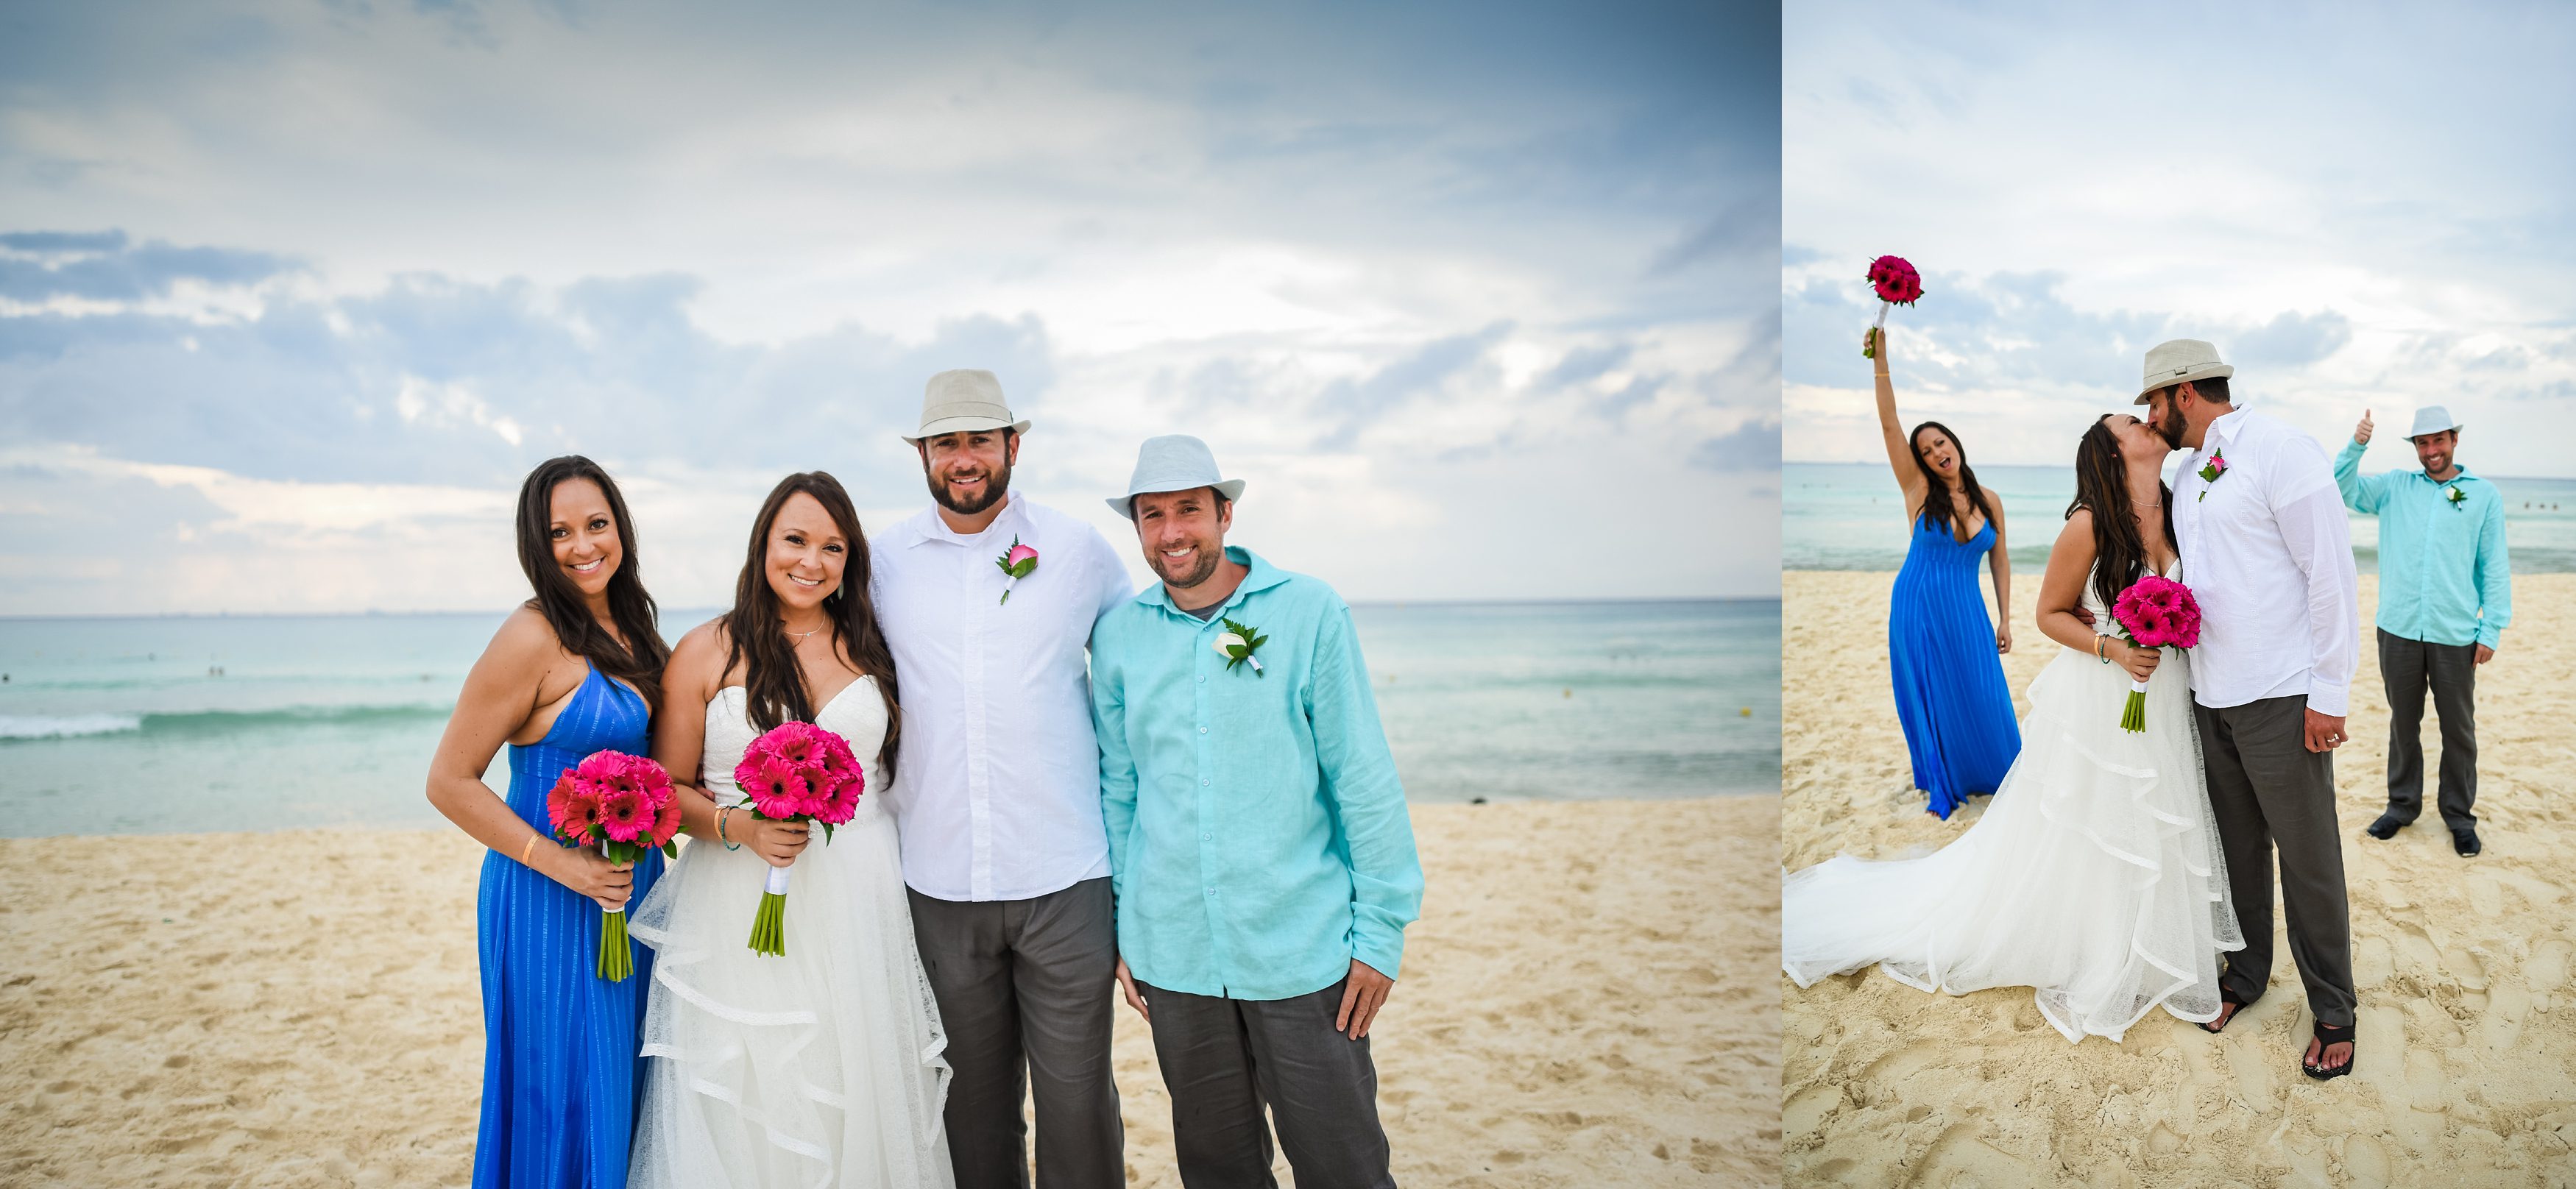 wedding party photos, beach weddings, Cancun weddings